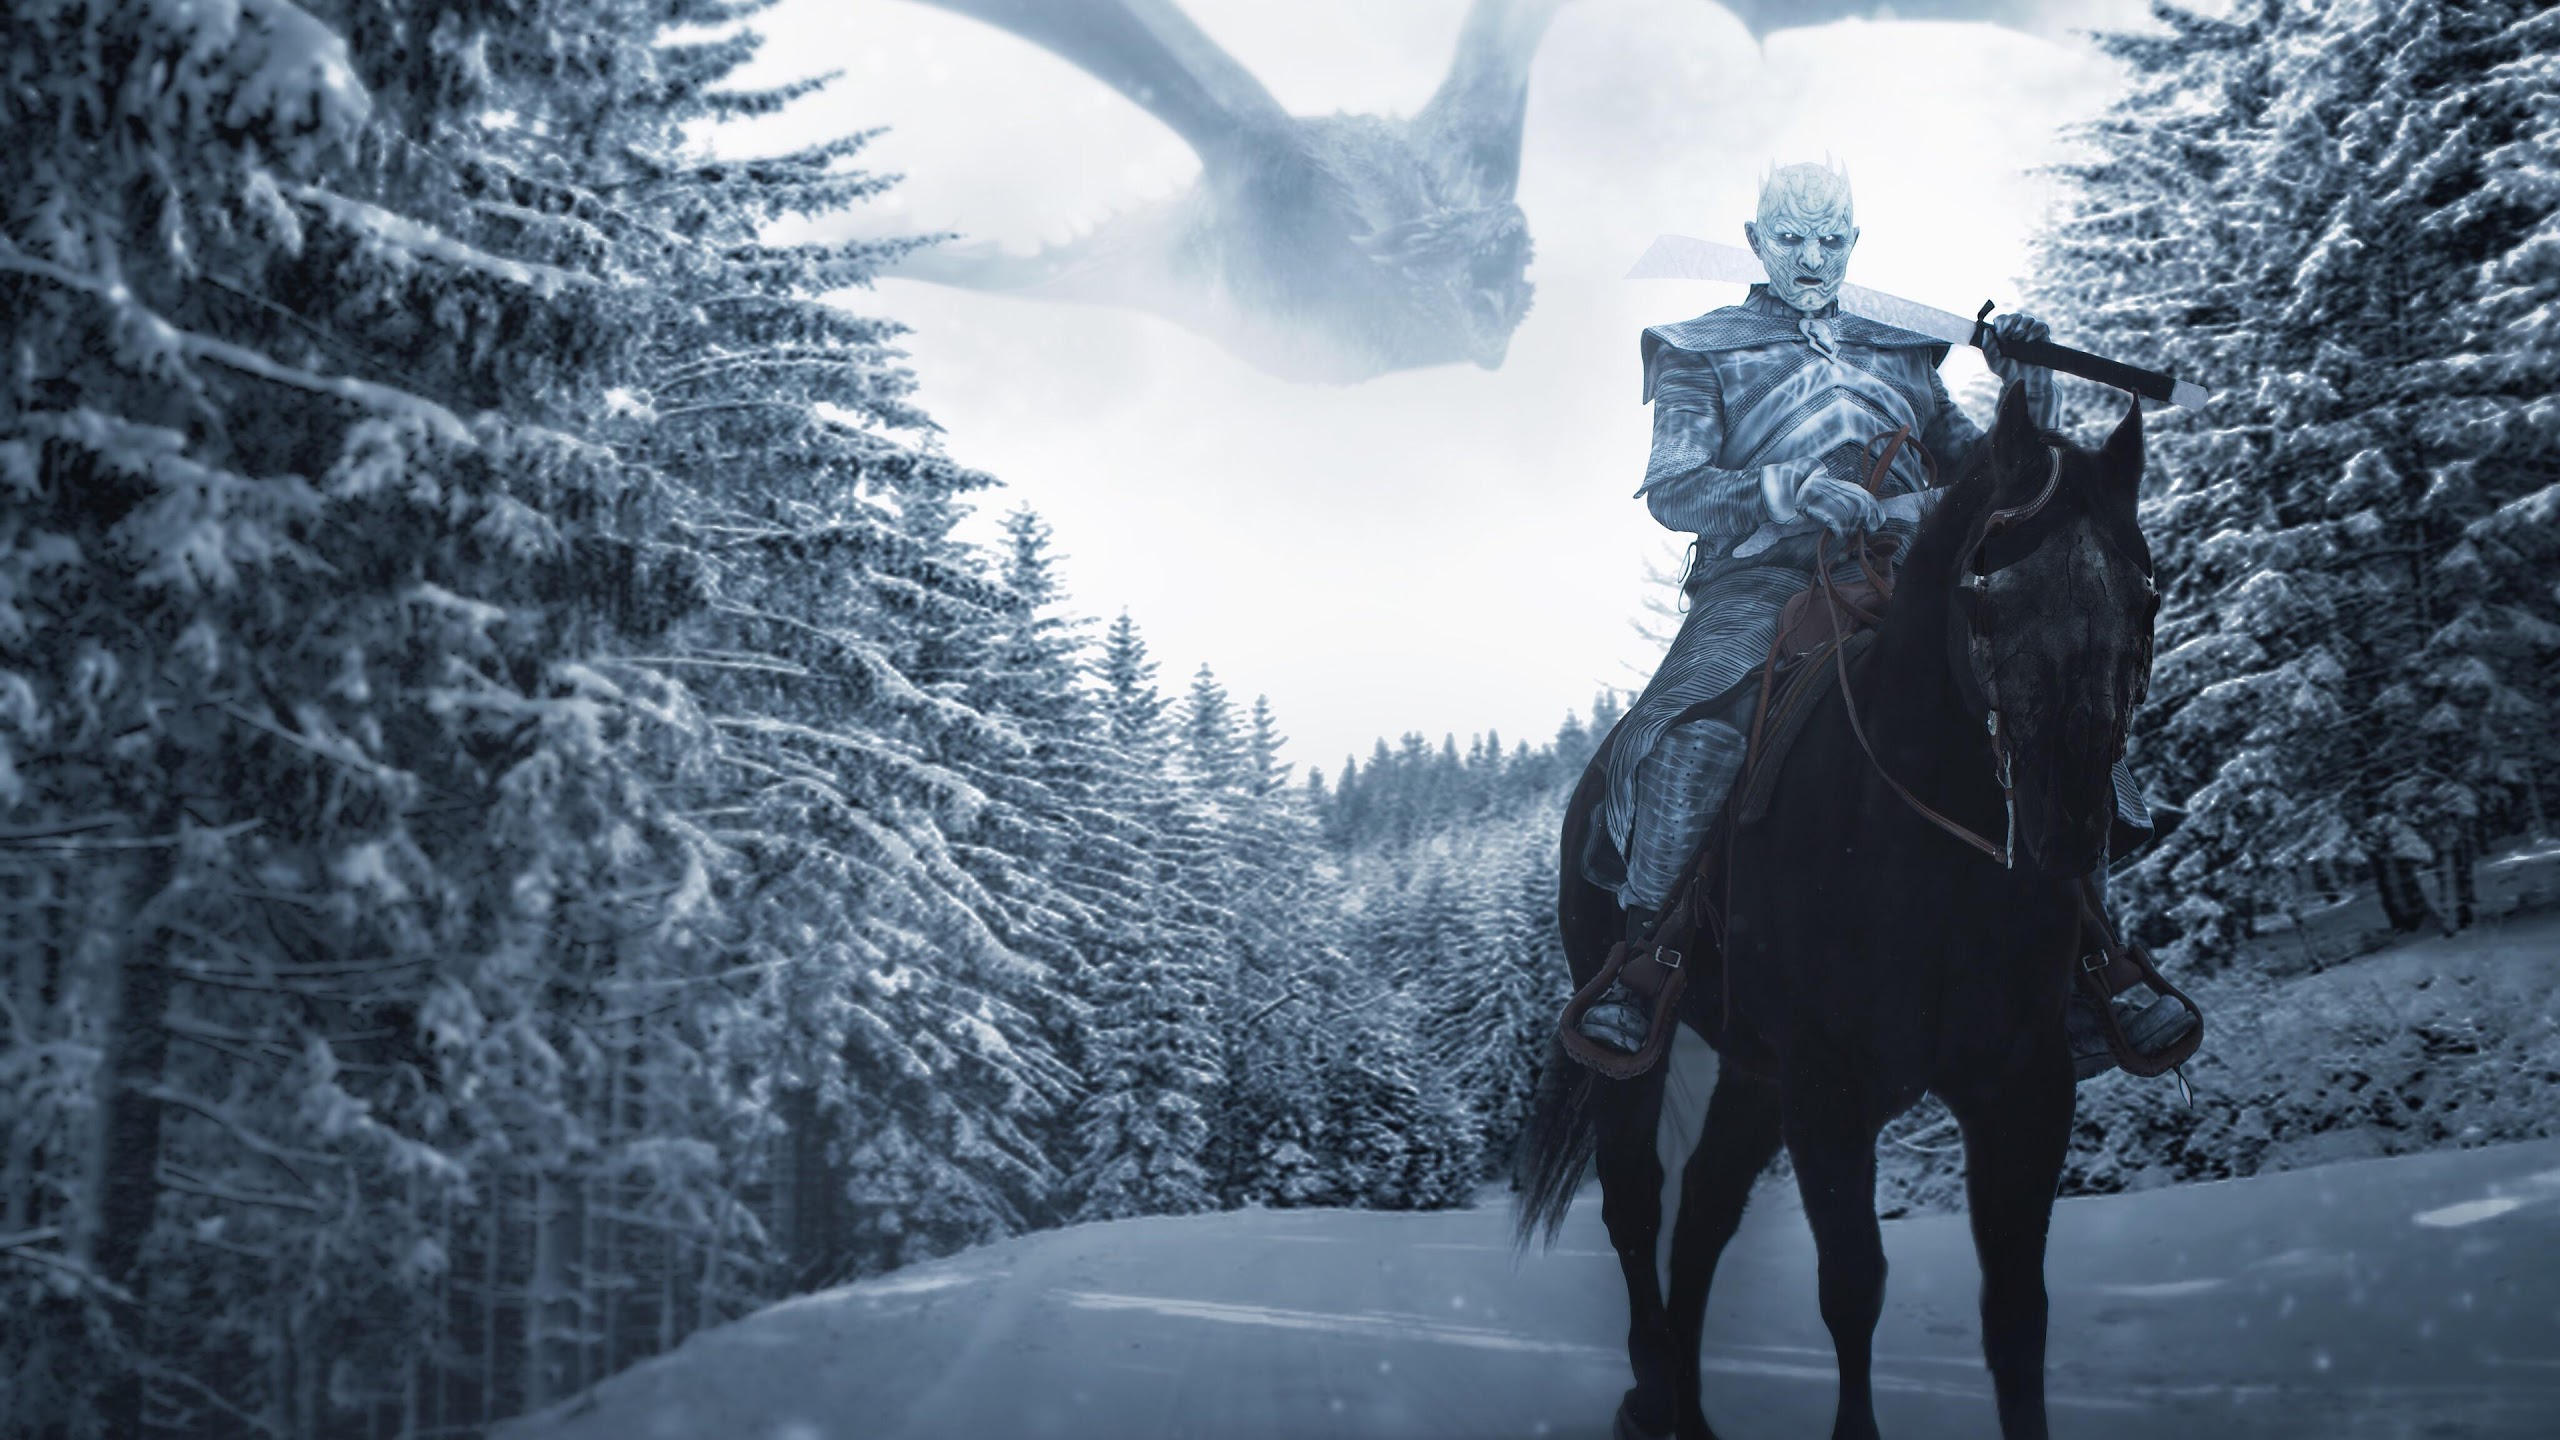 game of thrones wallpaper hd,horse,sky,winter,tree,snow